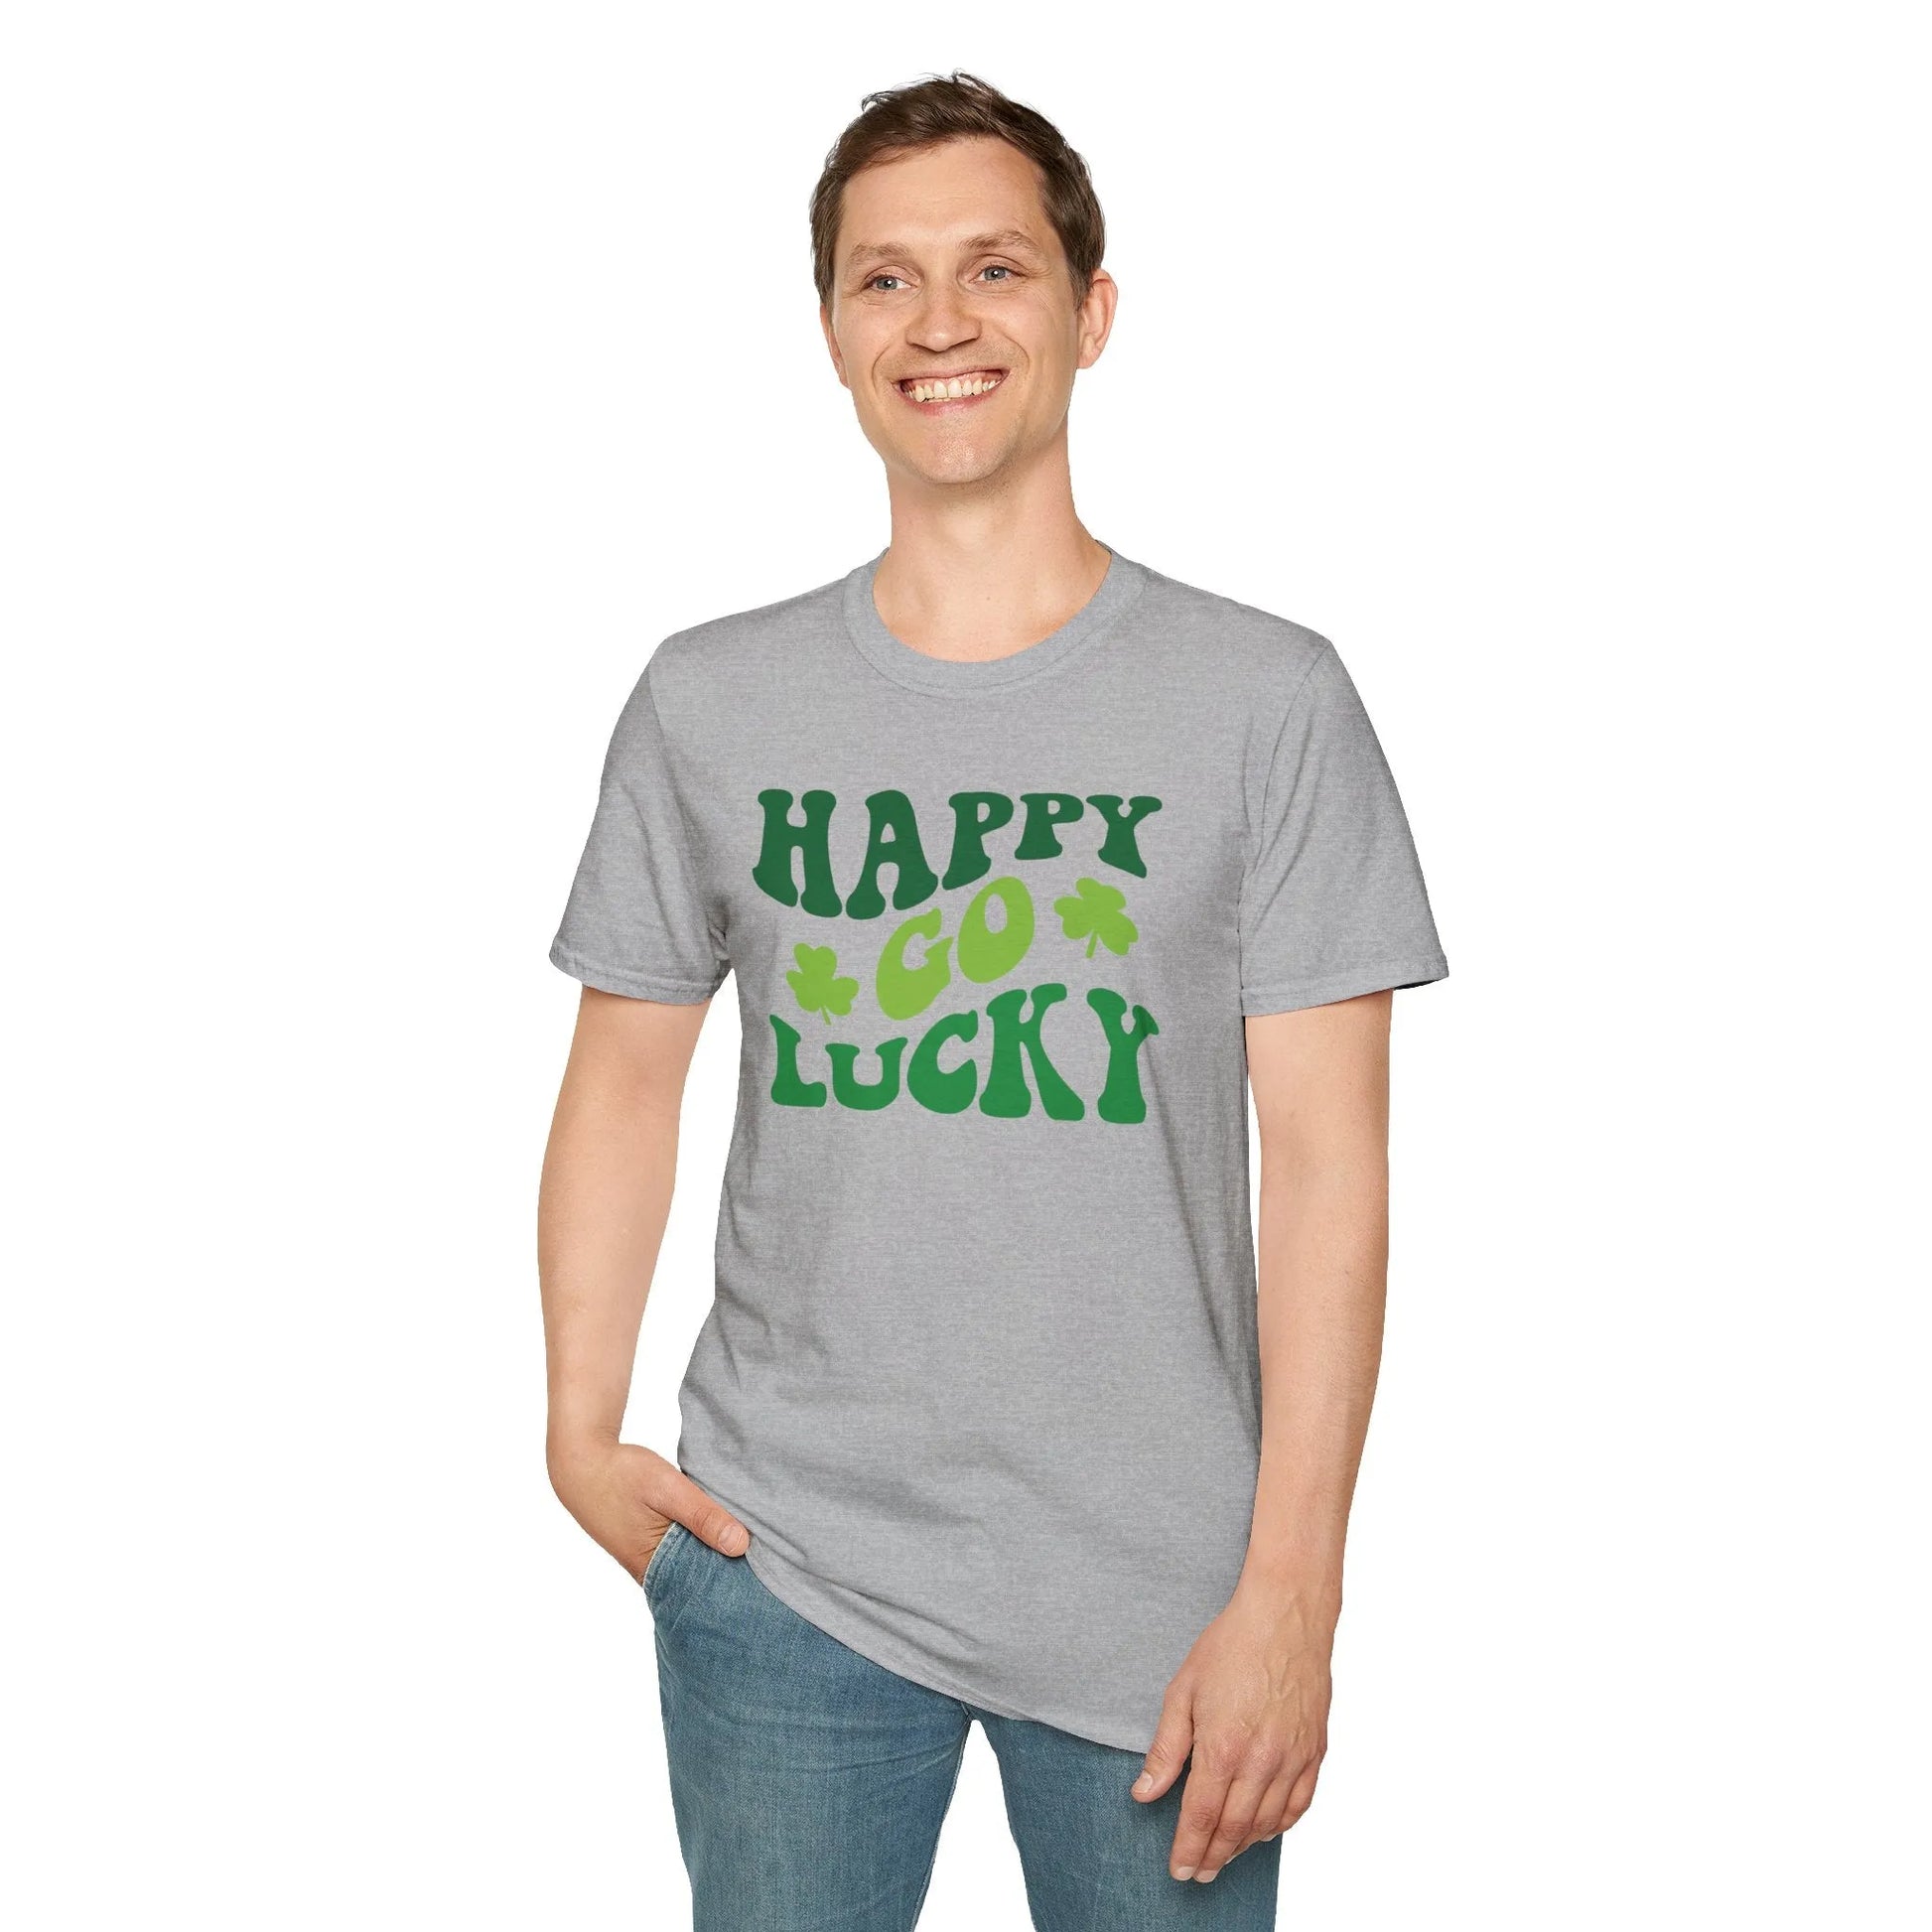 Happy Go Lucky Retro-Style St. Patrick's Day T-Shirt - Comfort & Charm - Happy Go Lucky St. Patrick's Day Shirt Grey Male Model